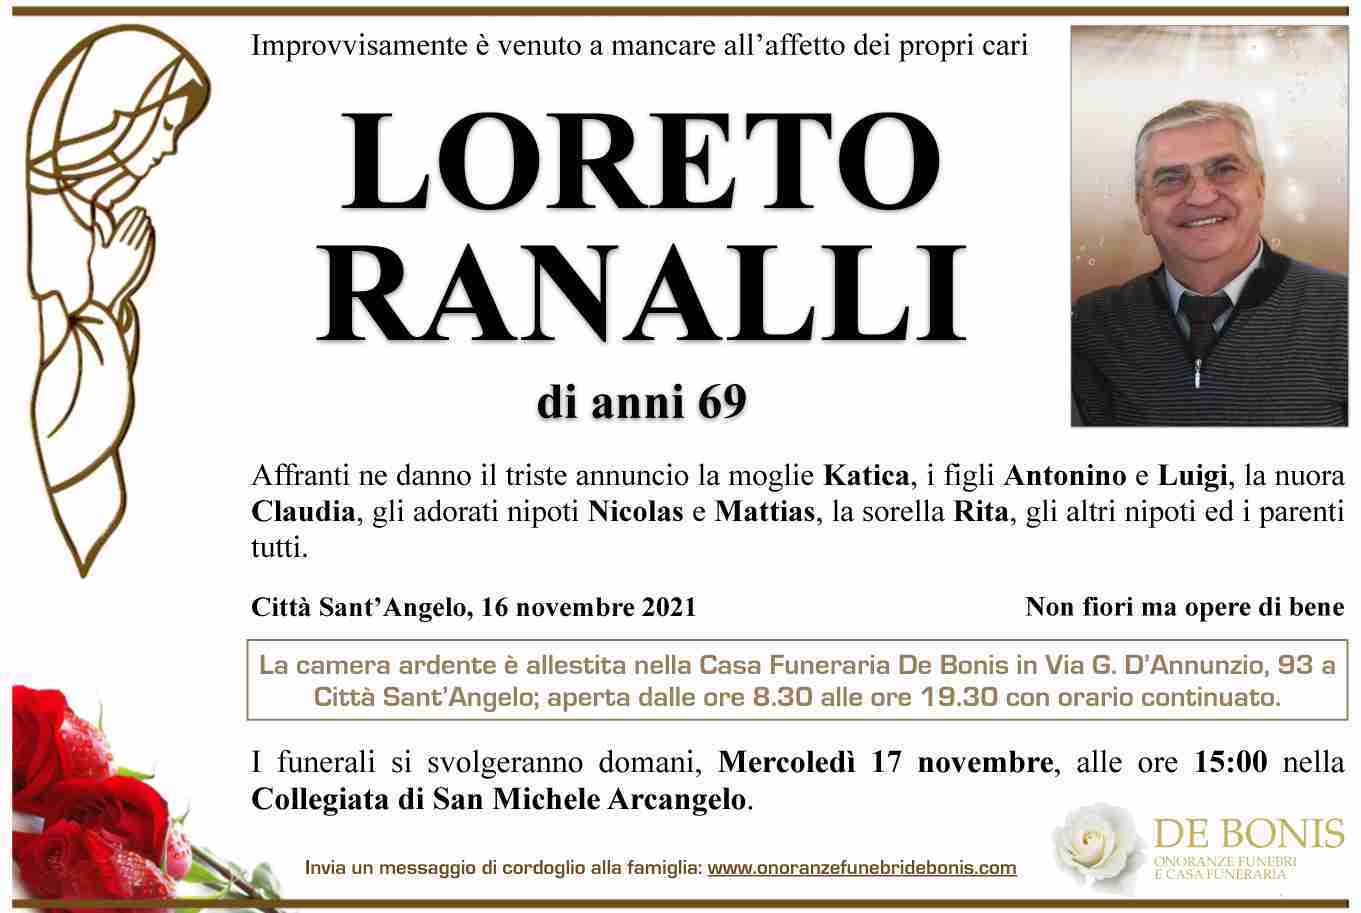 Loreto Ranalli